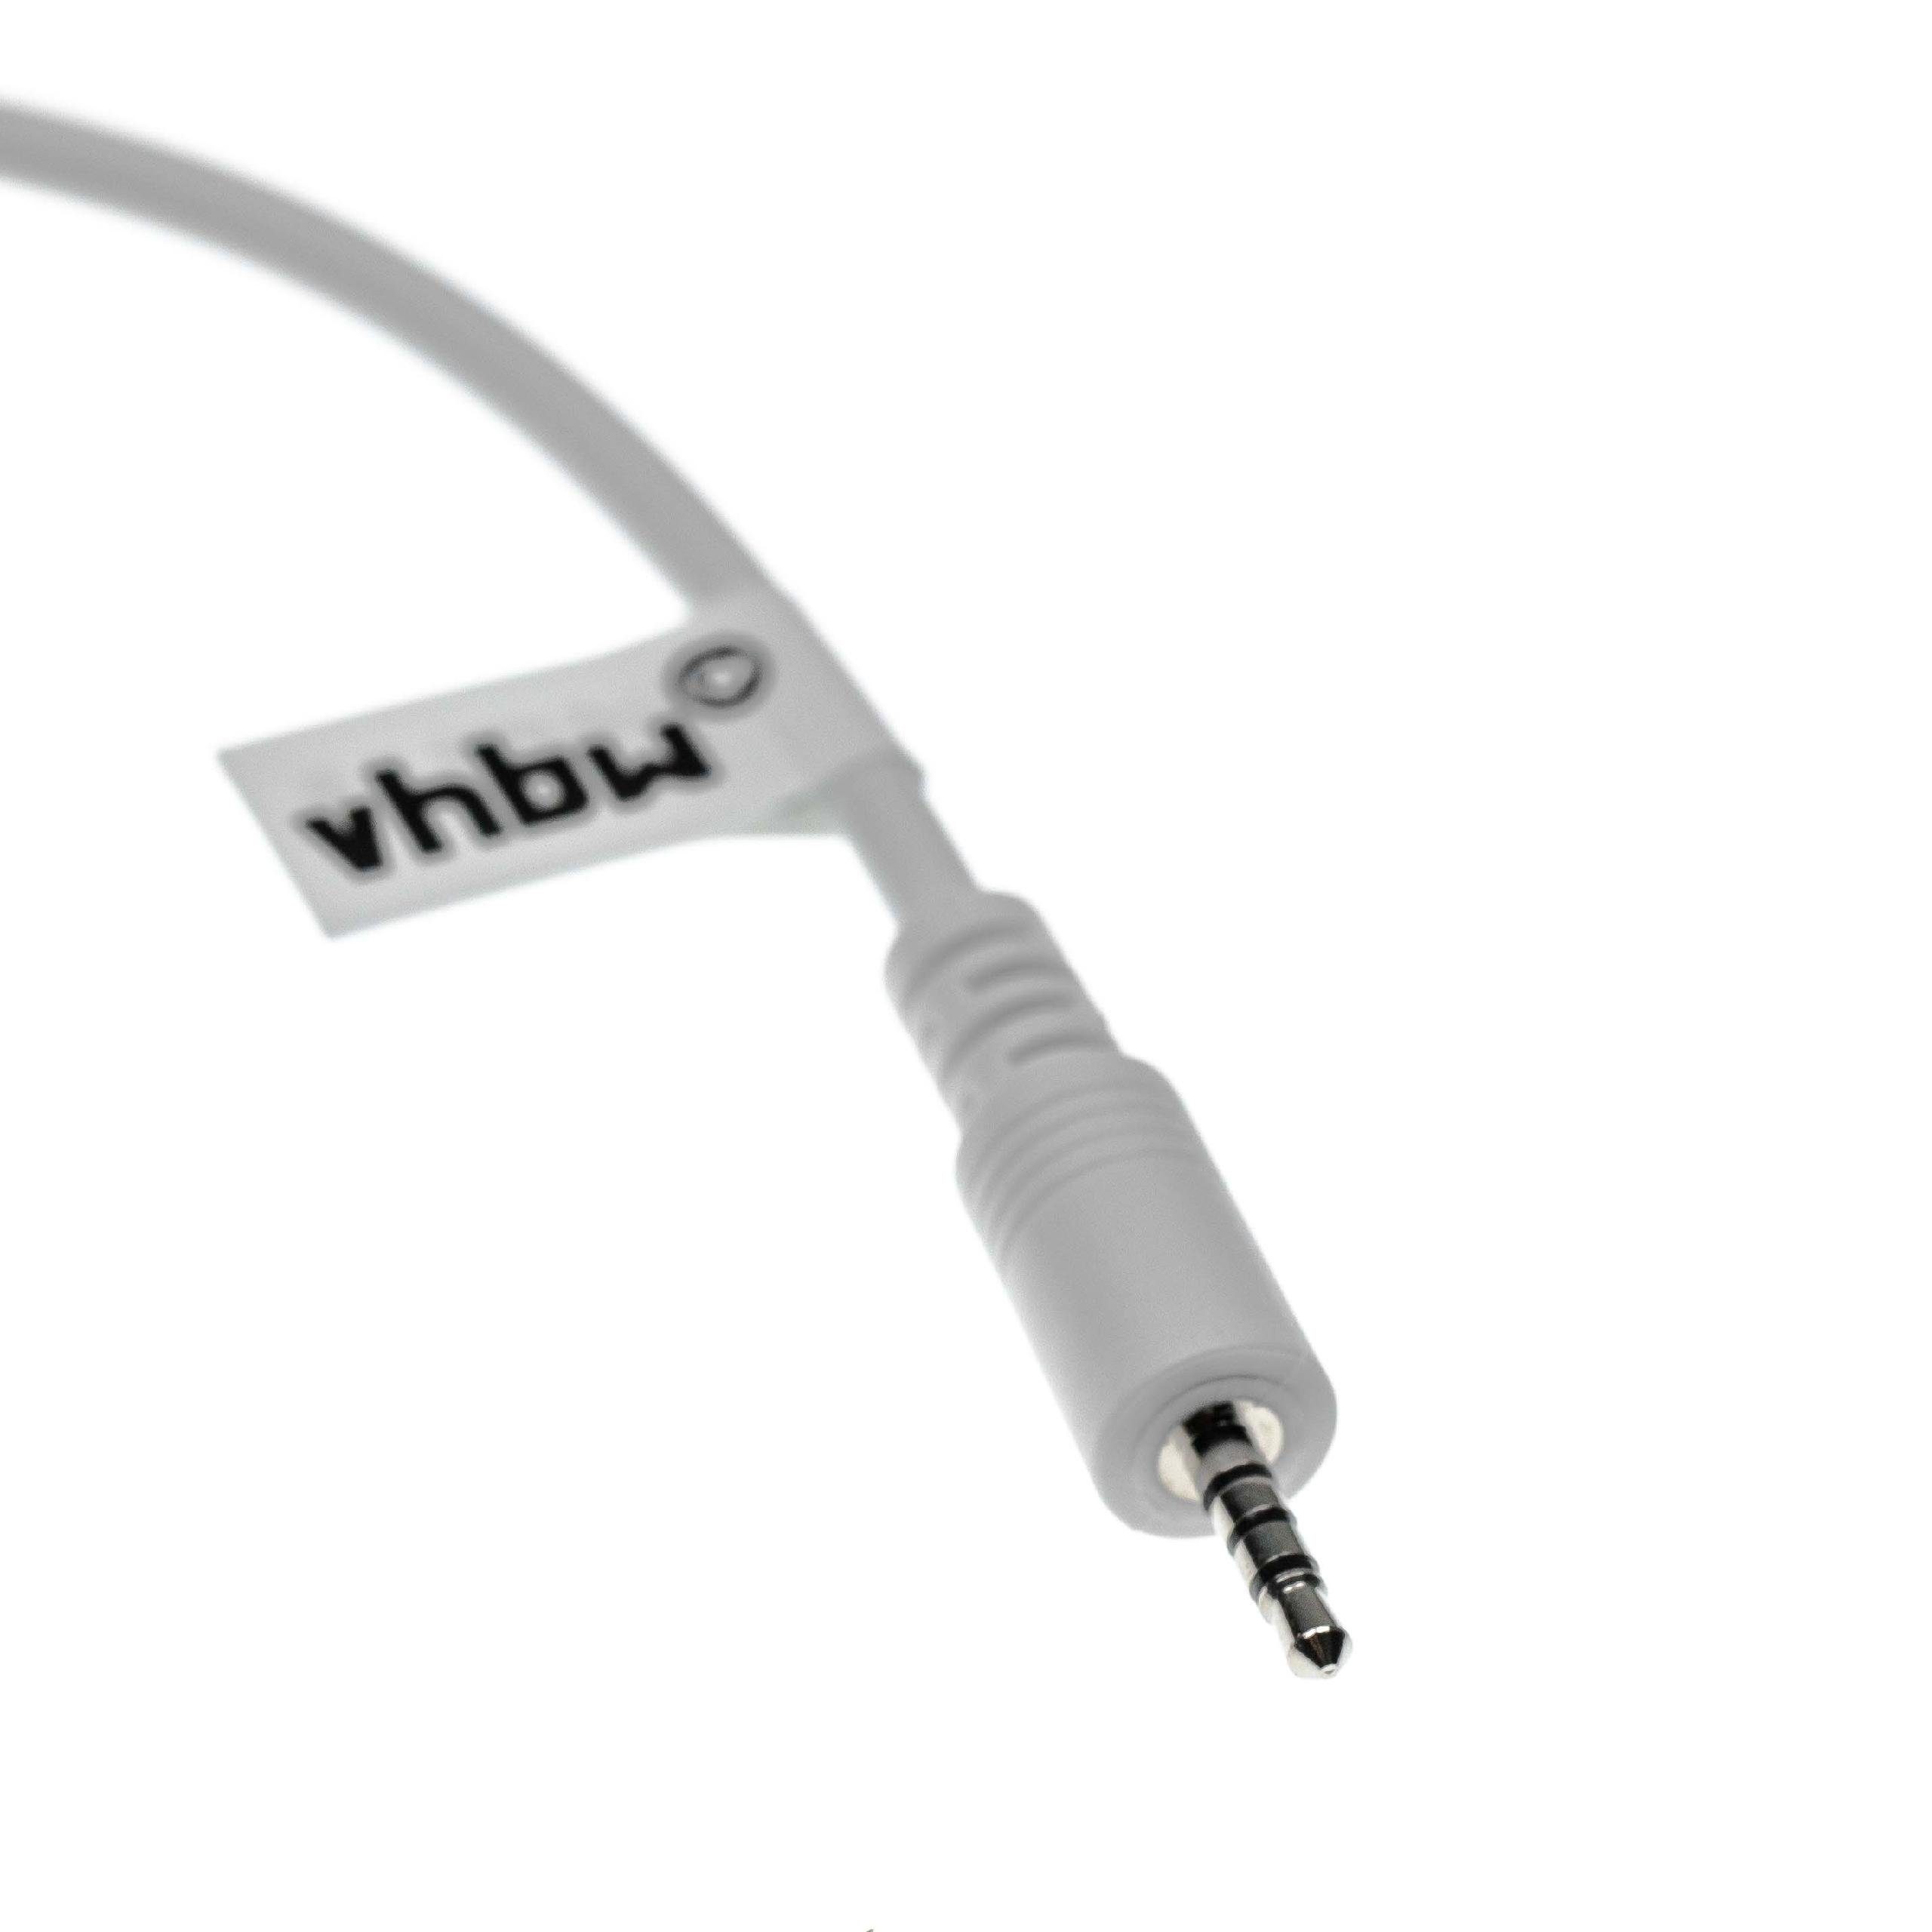 Premium BT passend Elektro-Kabel Kardon vhbw für Kopfhörer Harman